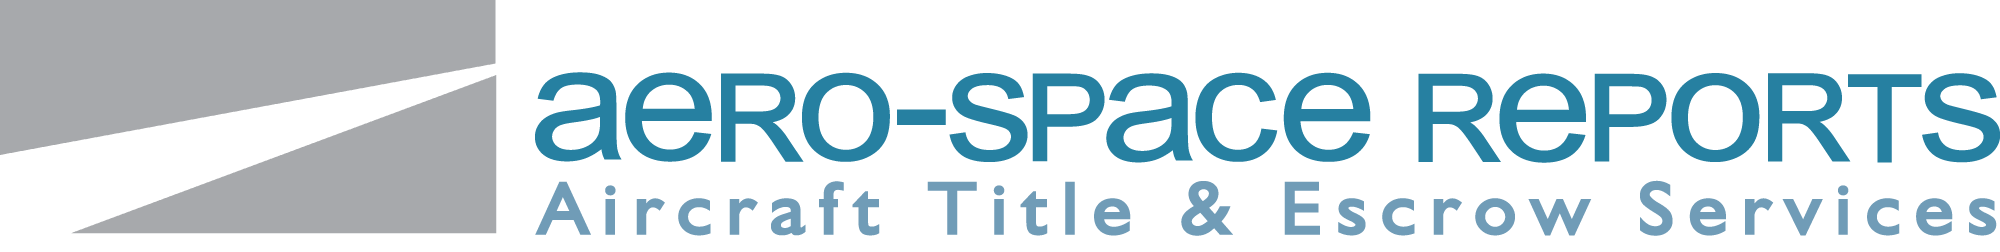 Aero-Space Reports, Inc. logo